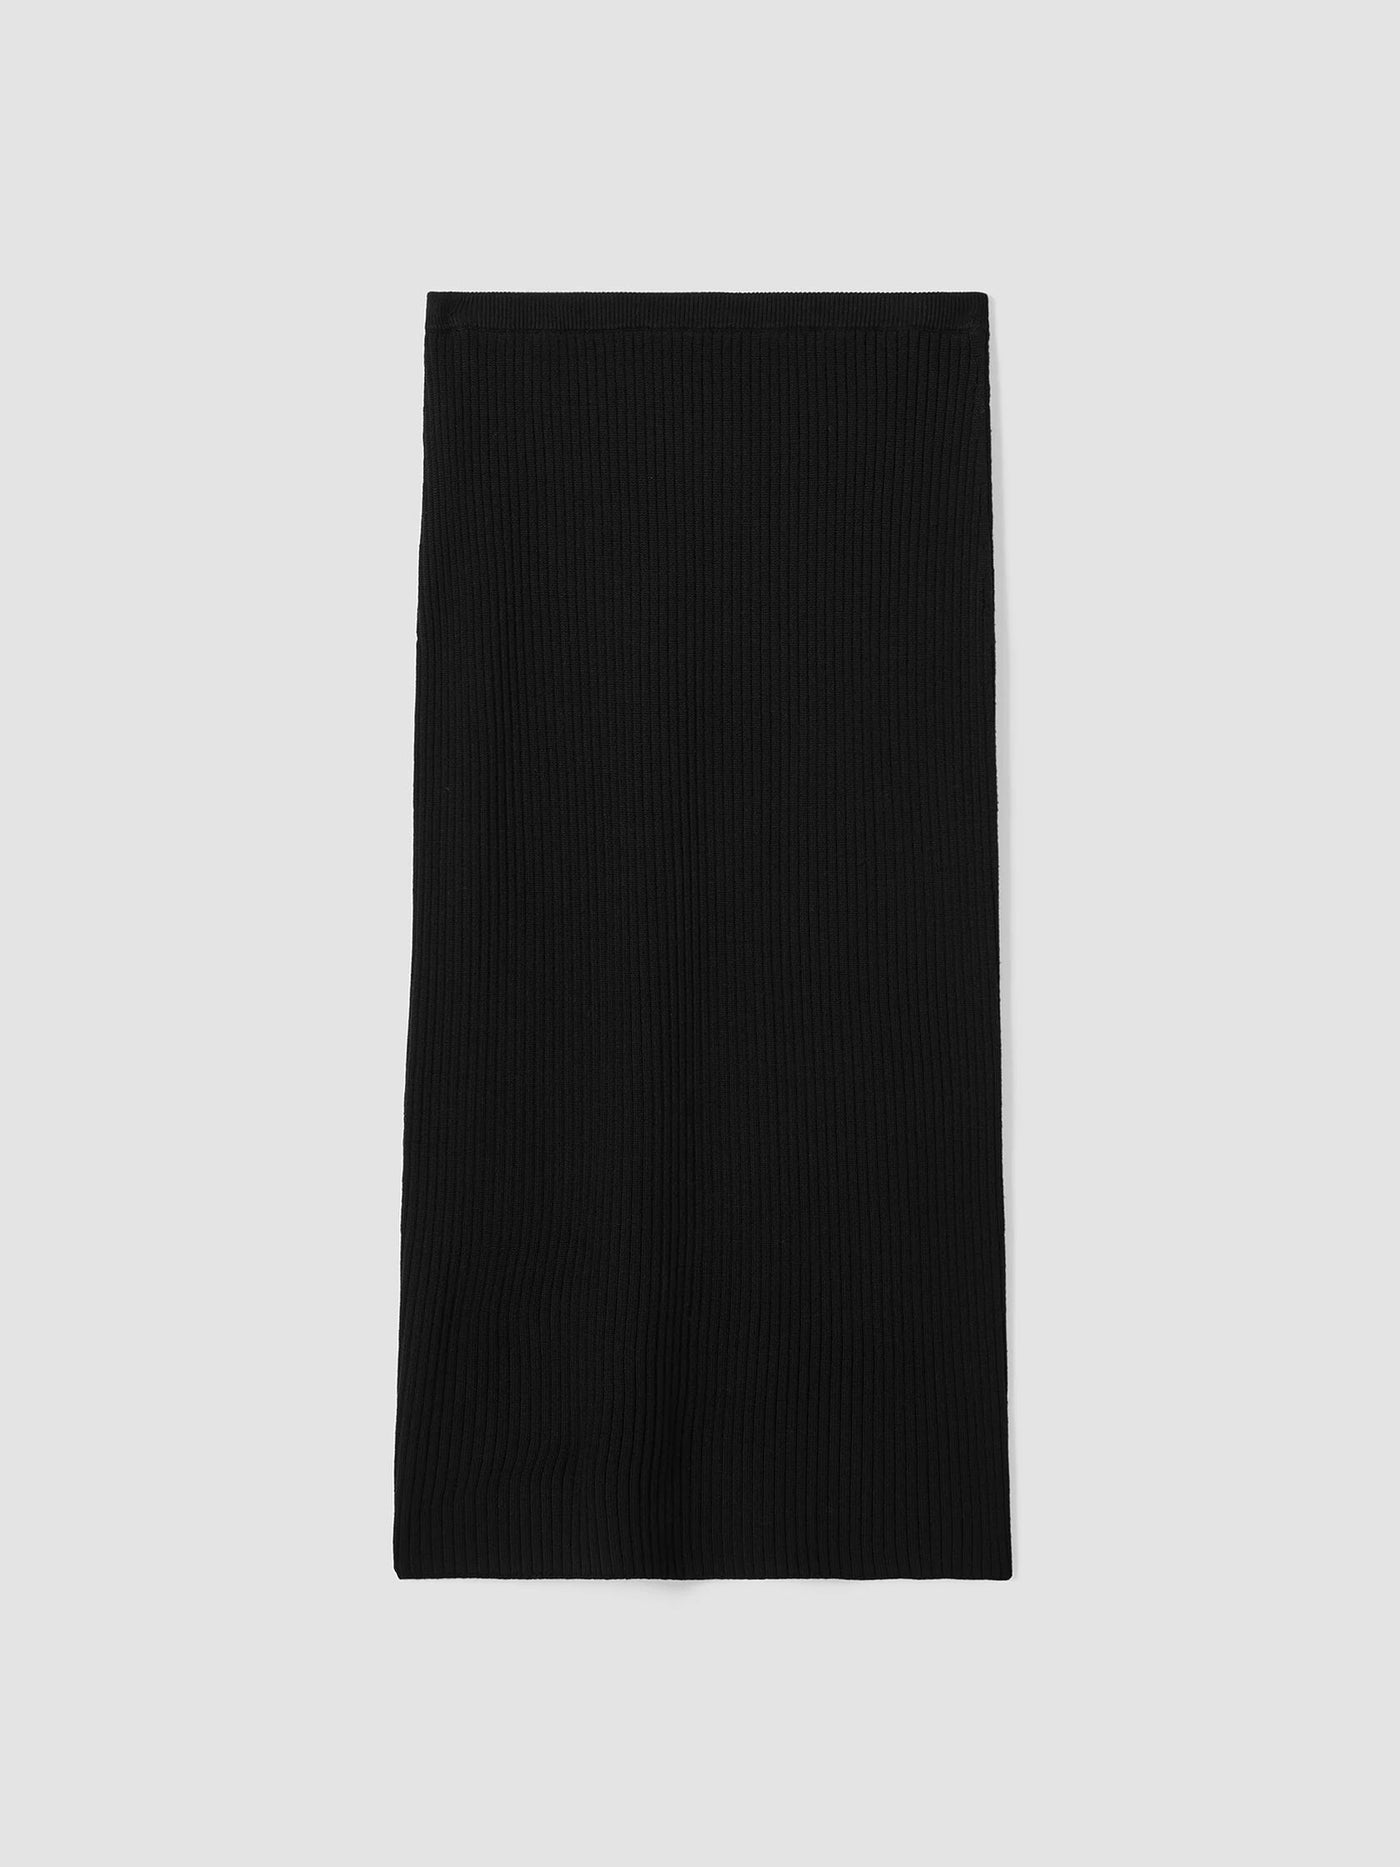 Eileen Fisher Merino Knit Slim Pencil Skirt in Black